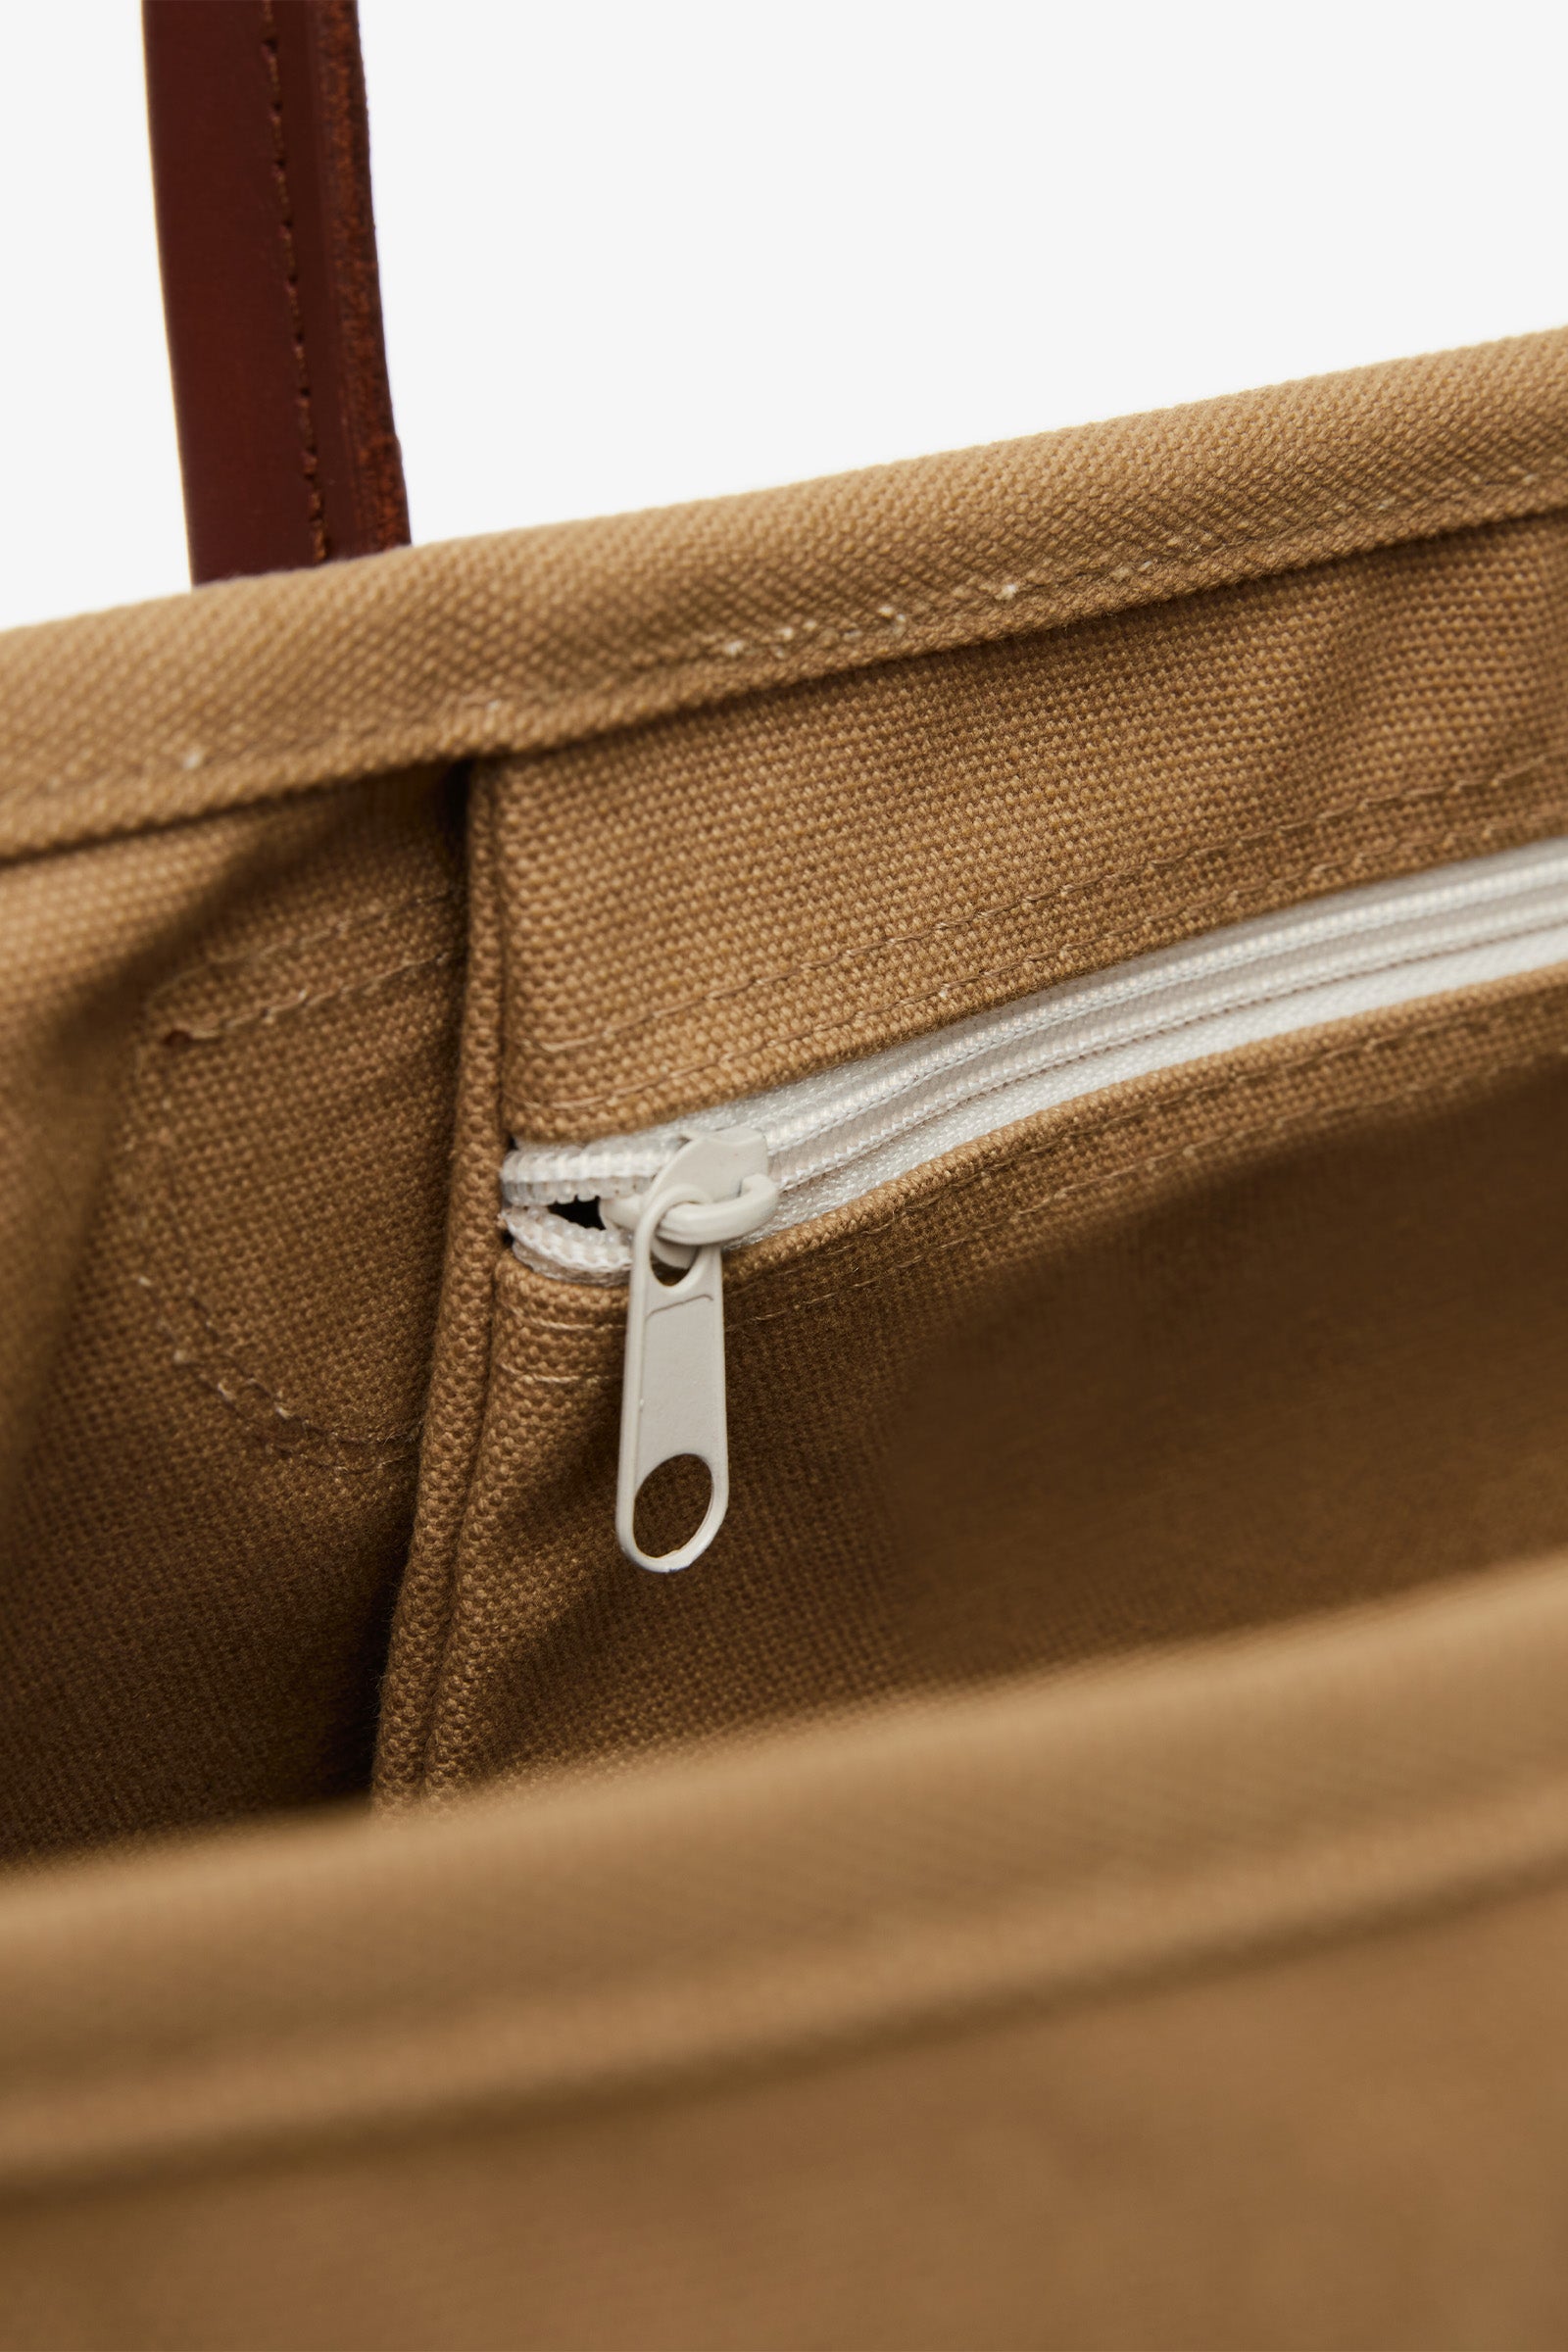 Mid-century Modern Leather Handle Tote Bag /  Tan